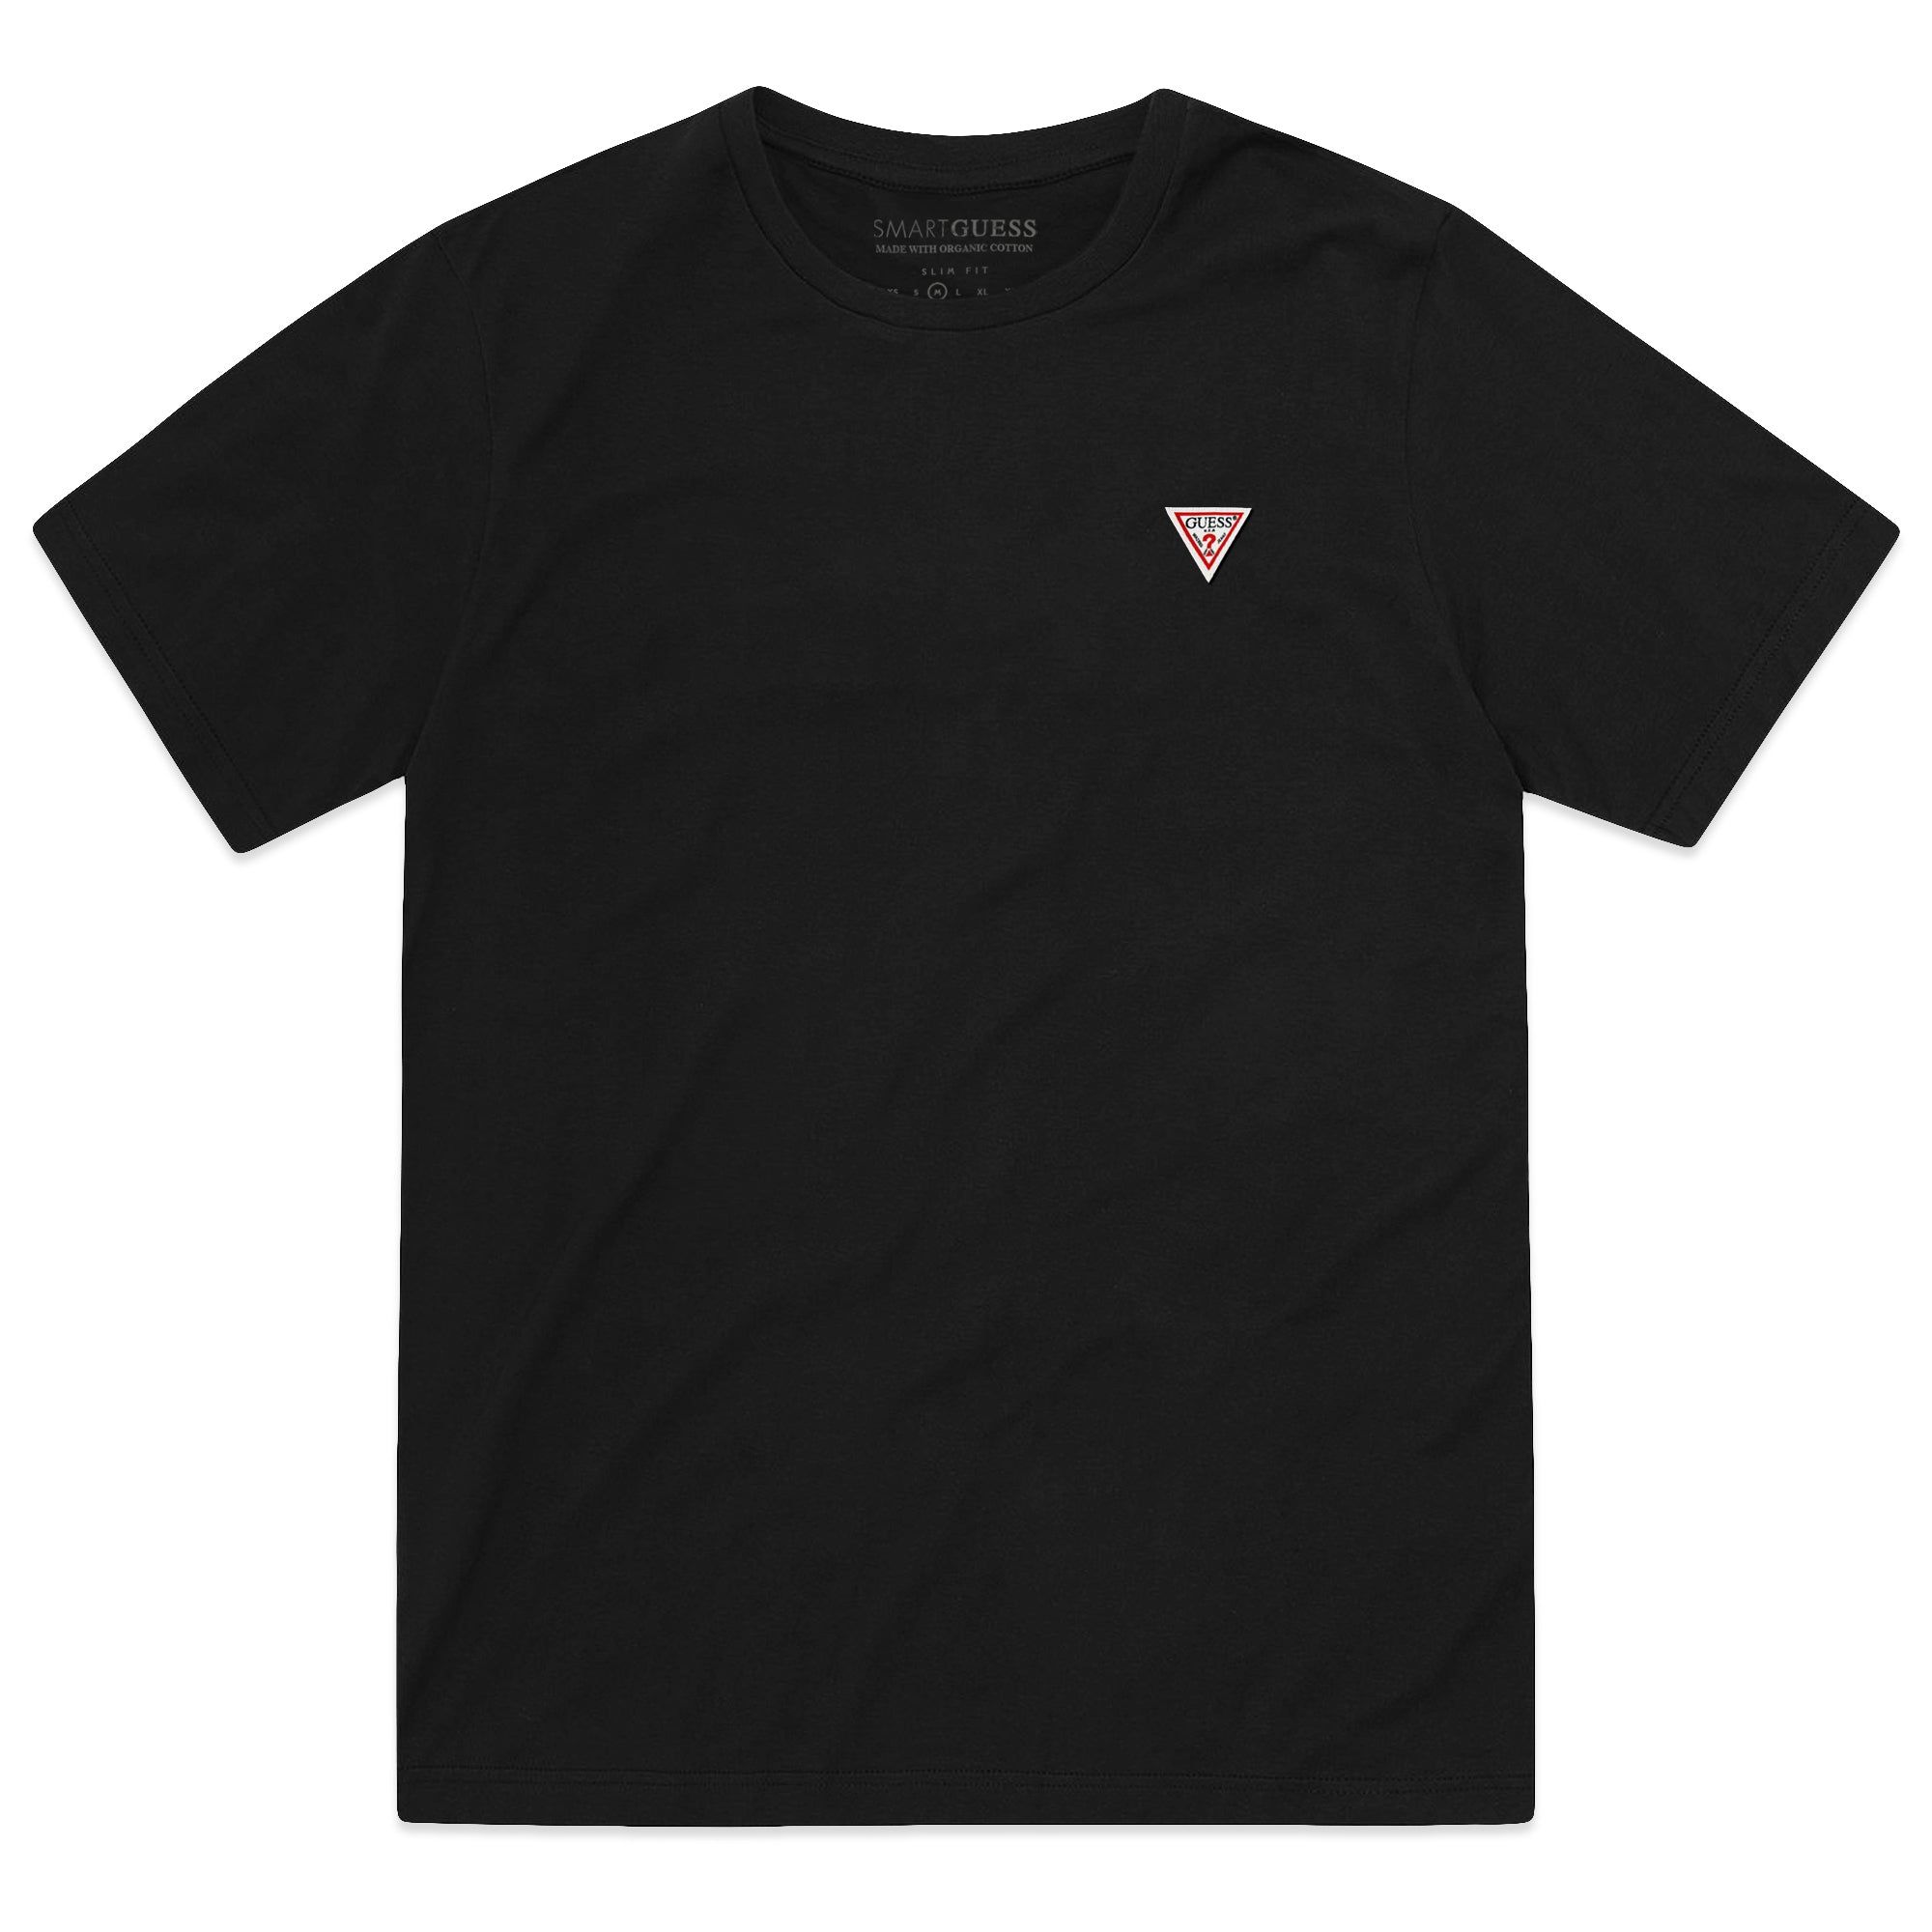 Guess Core Small Logo T-Shirt - Black